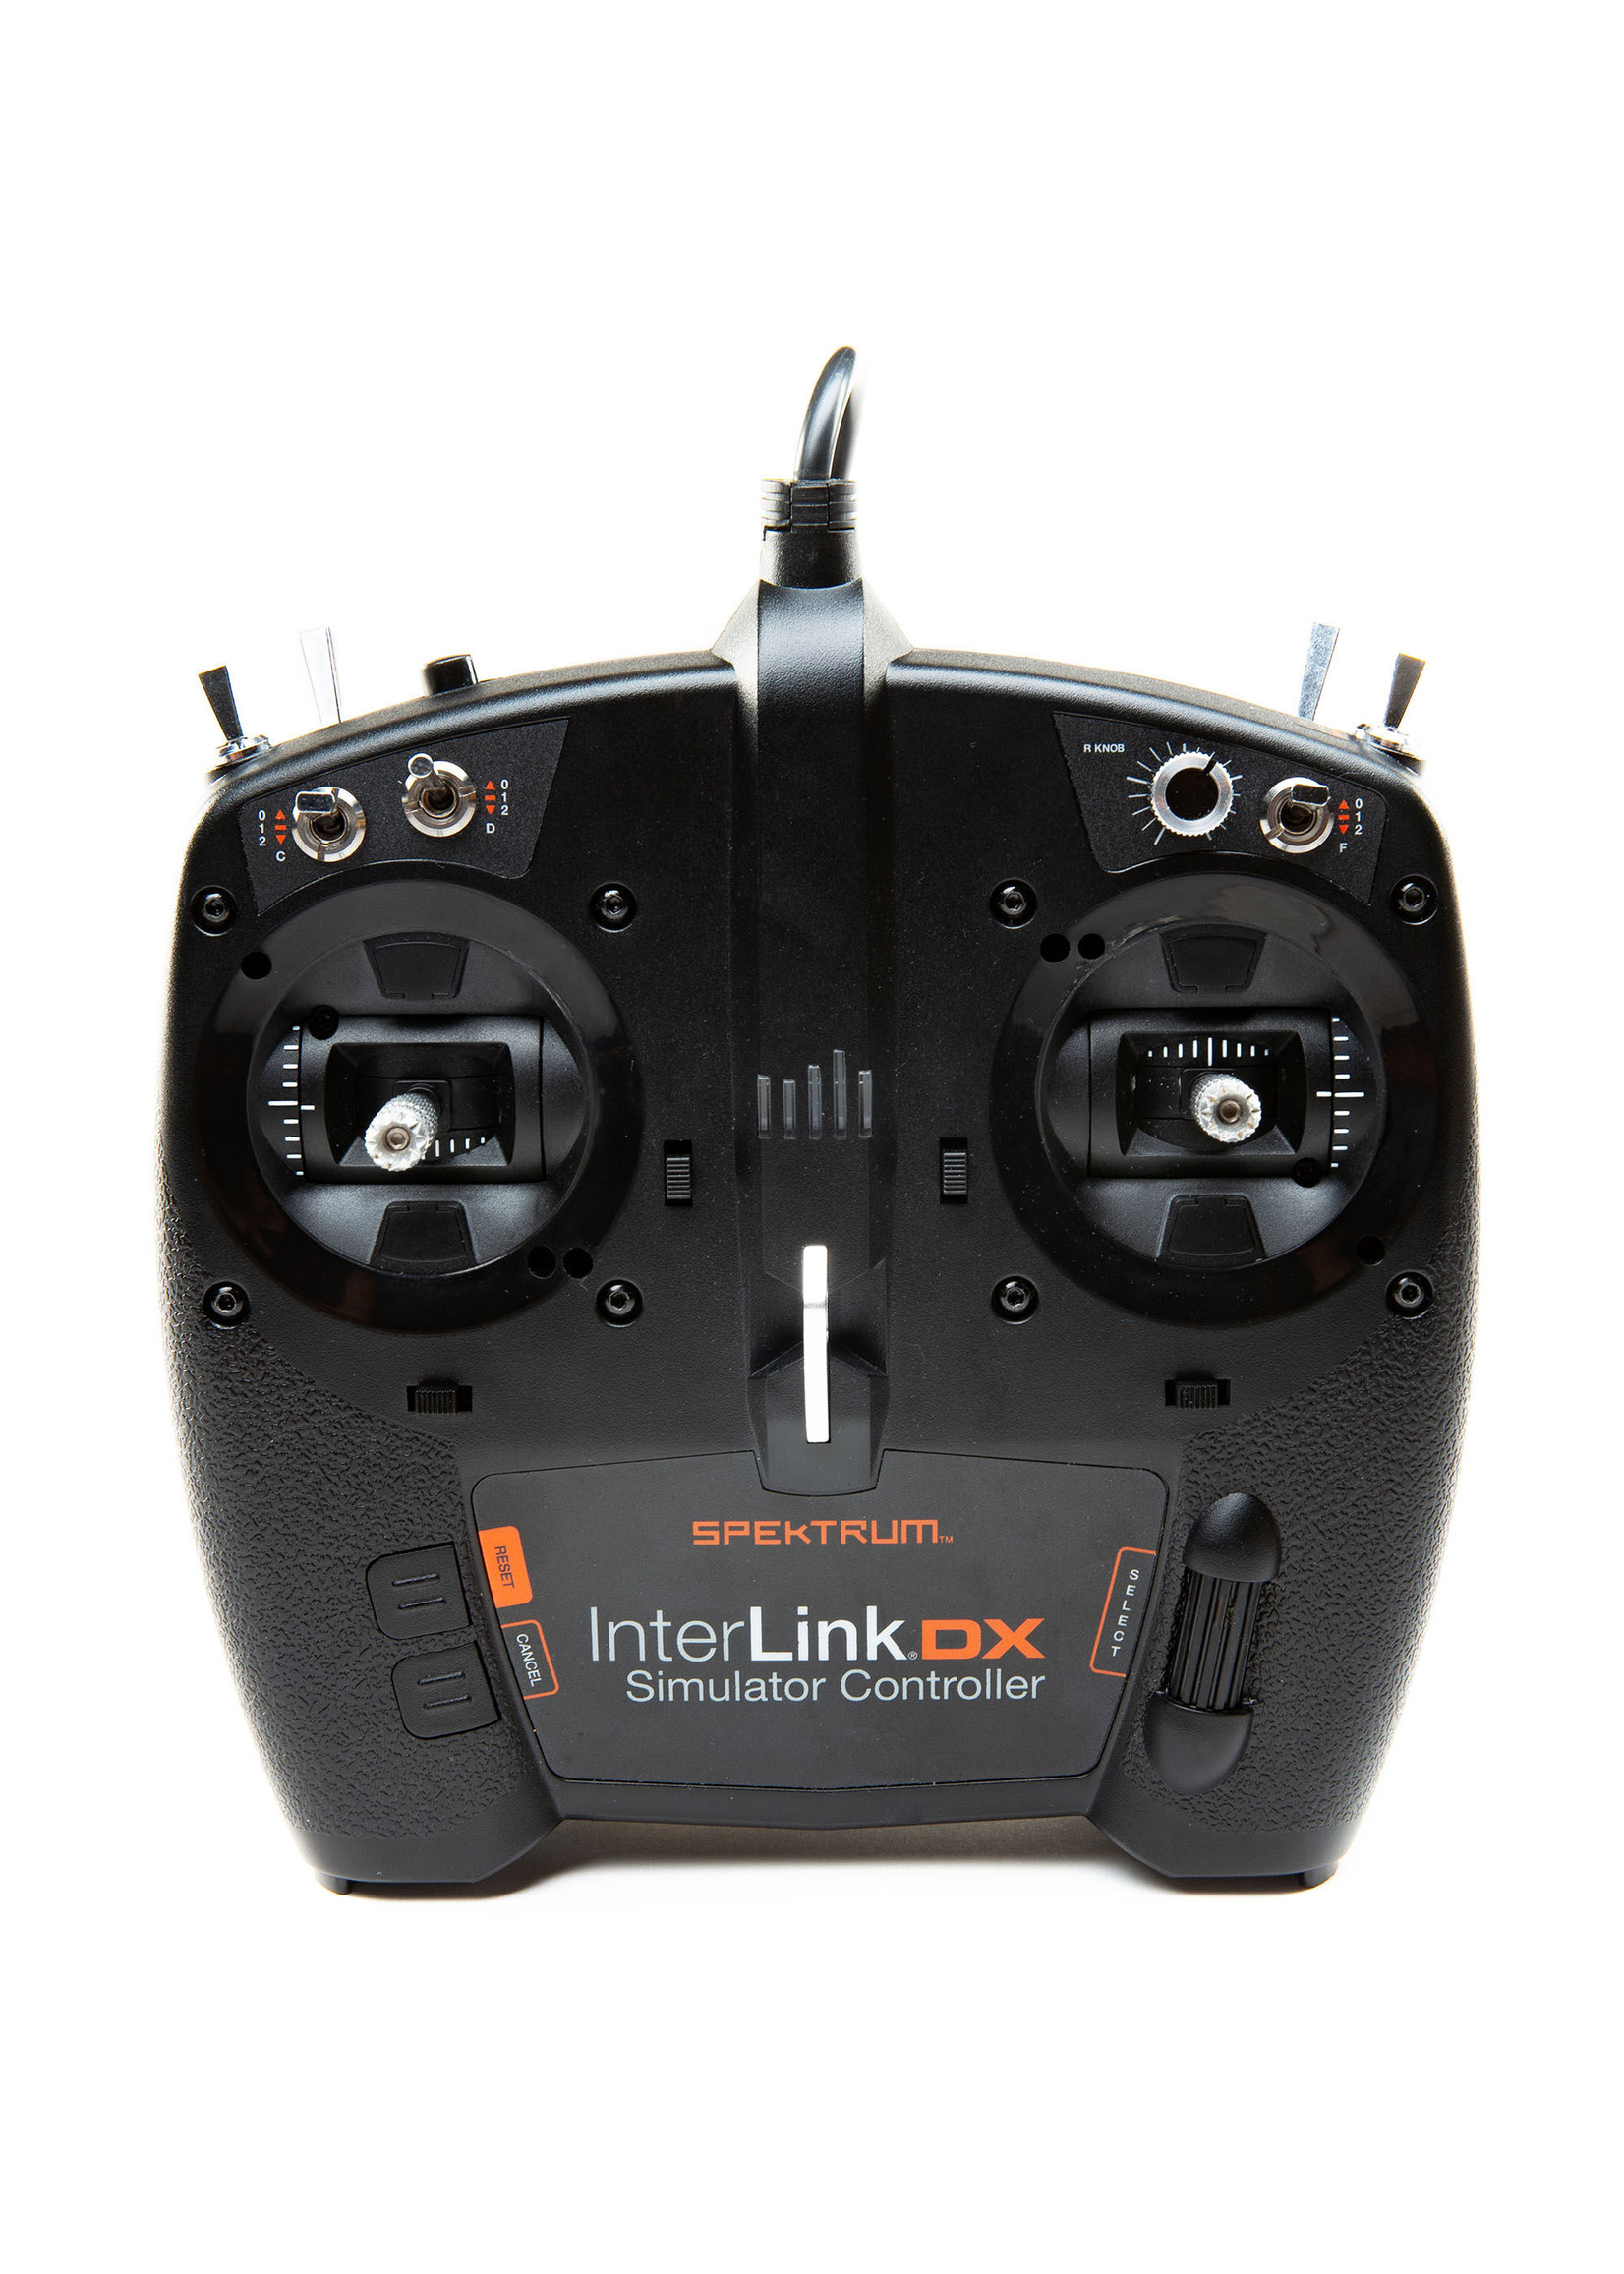 Spektrum SPMRFTX1 - InterLink DX Simulator Controller with USB Plug